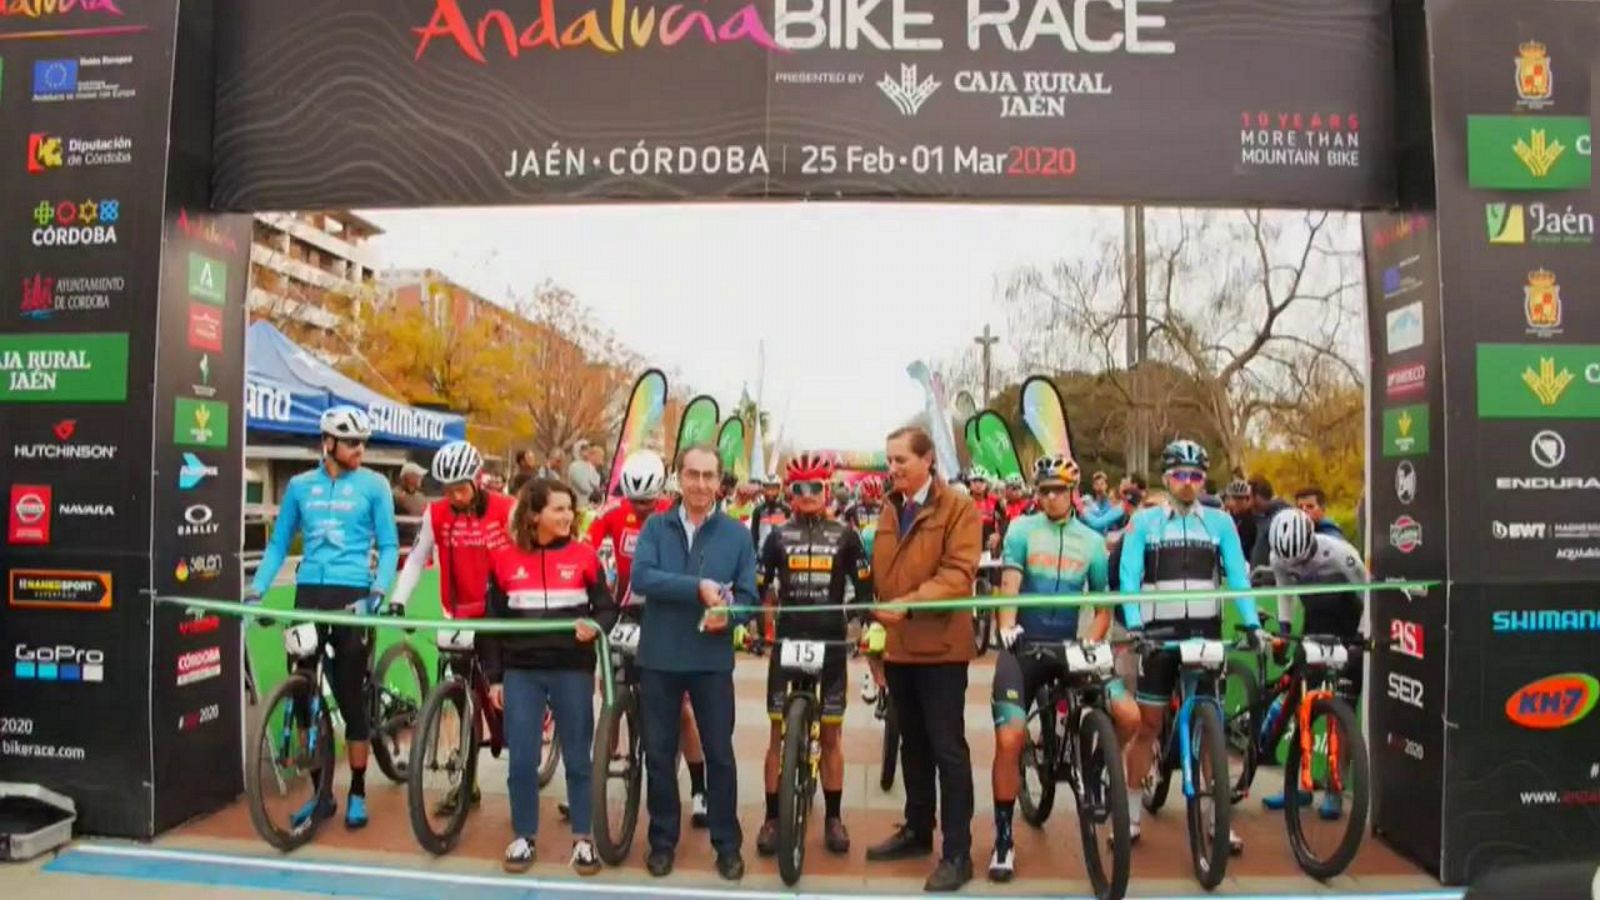 Mountain Bike - Andalucía Bike Race 2020 - RTVE.es